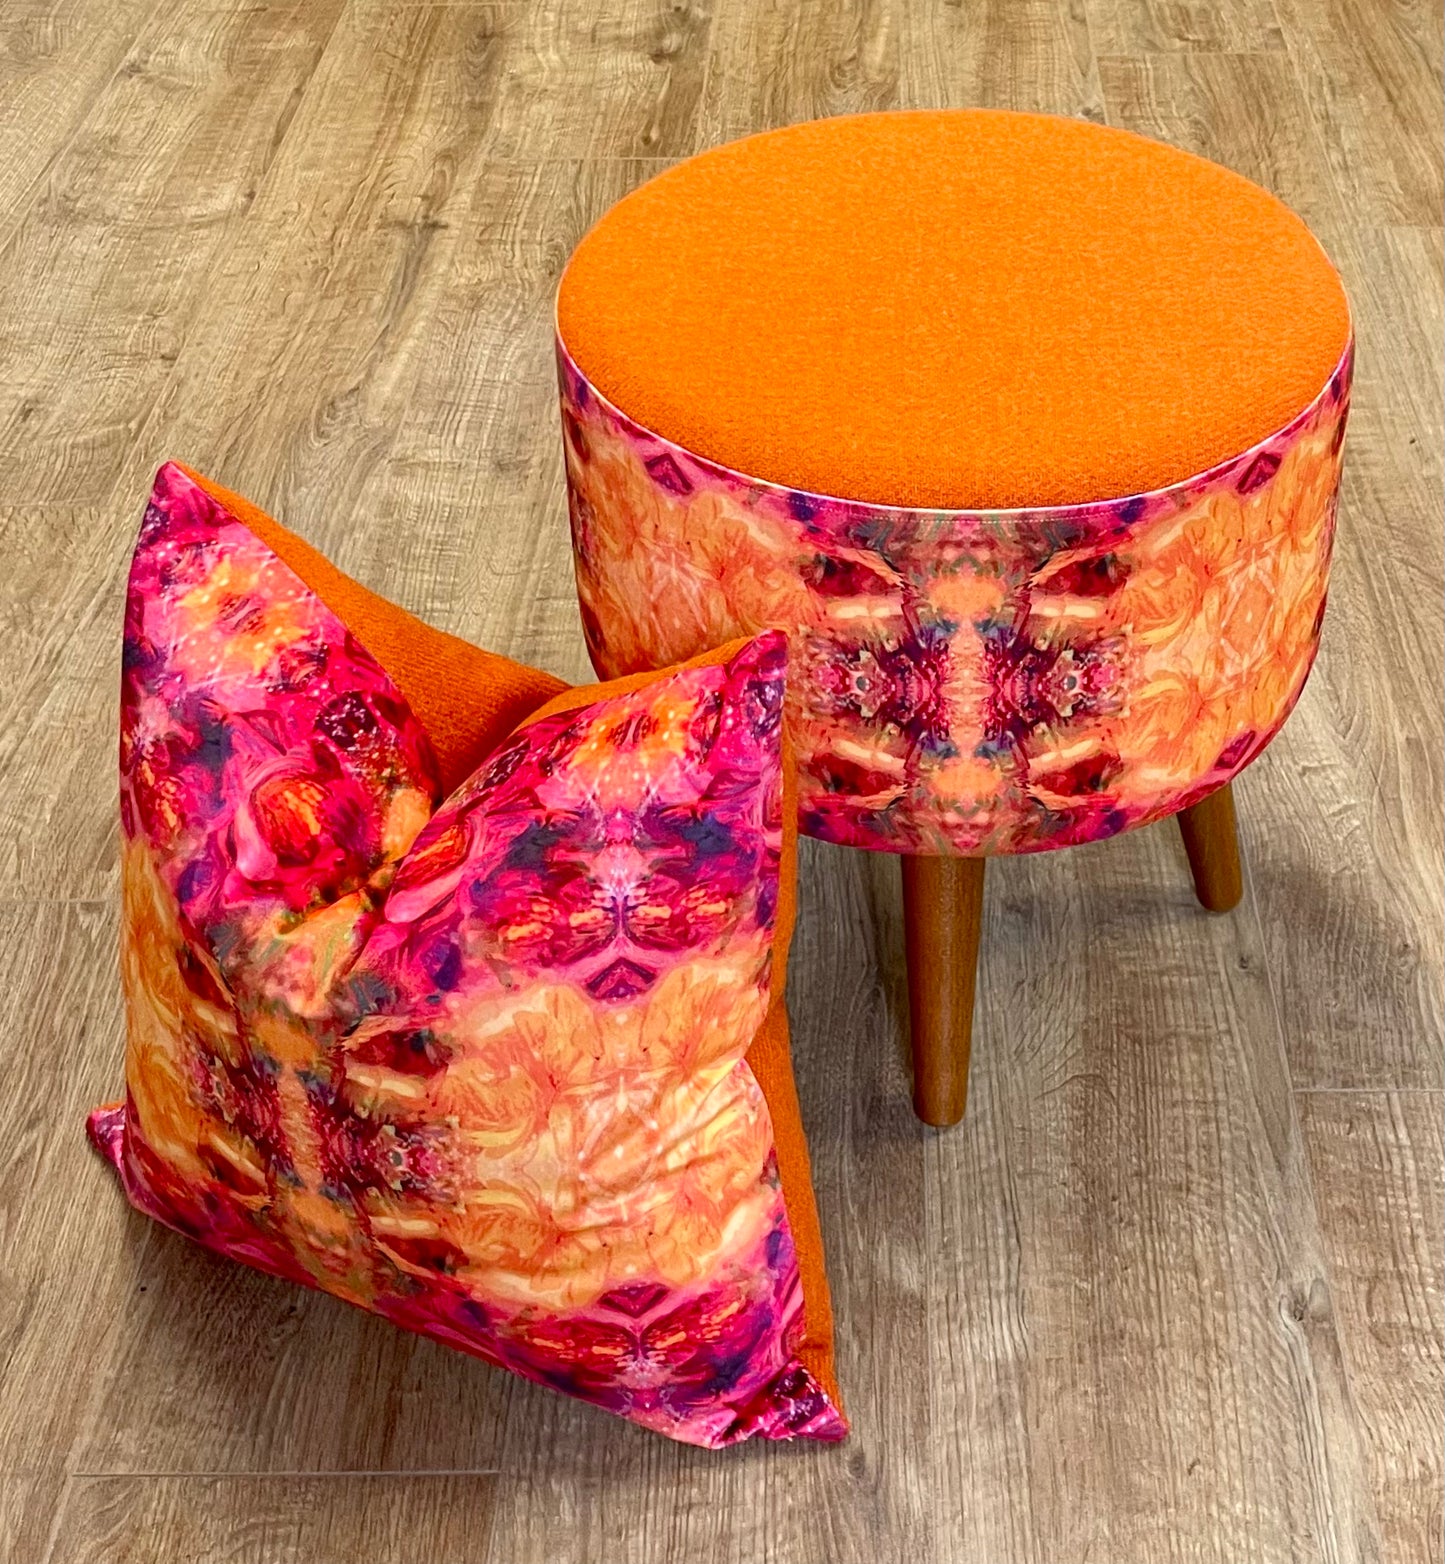 Fire Velvet and Bright Pink Harris Tweed Cushion, Handmade, 18”